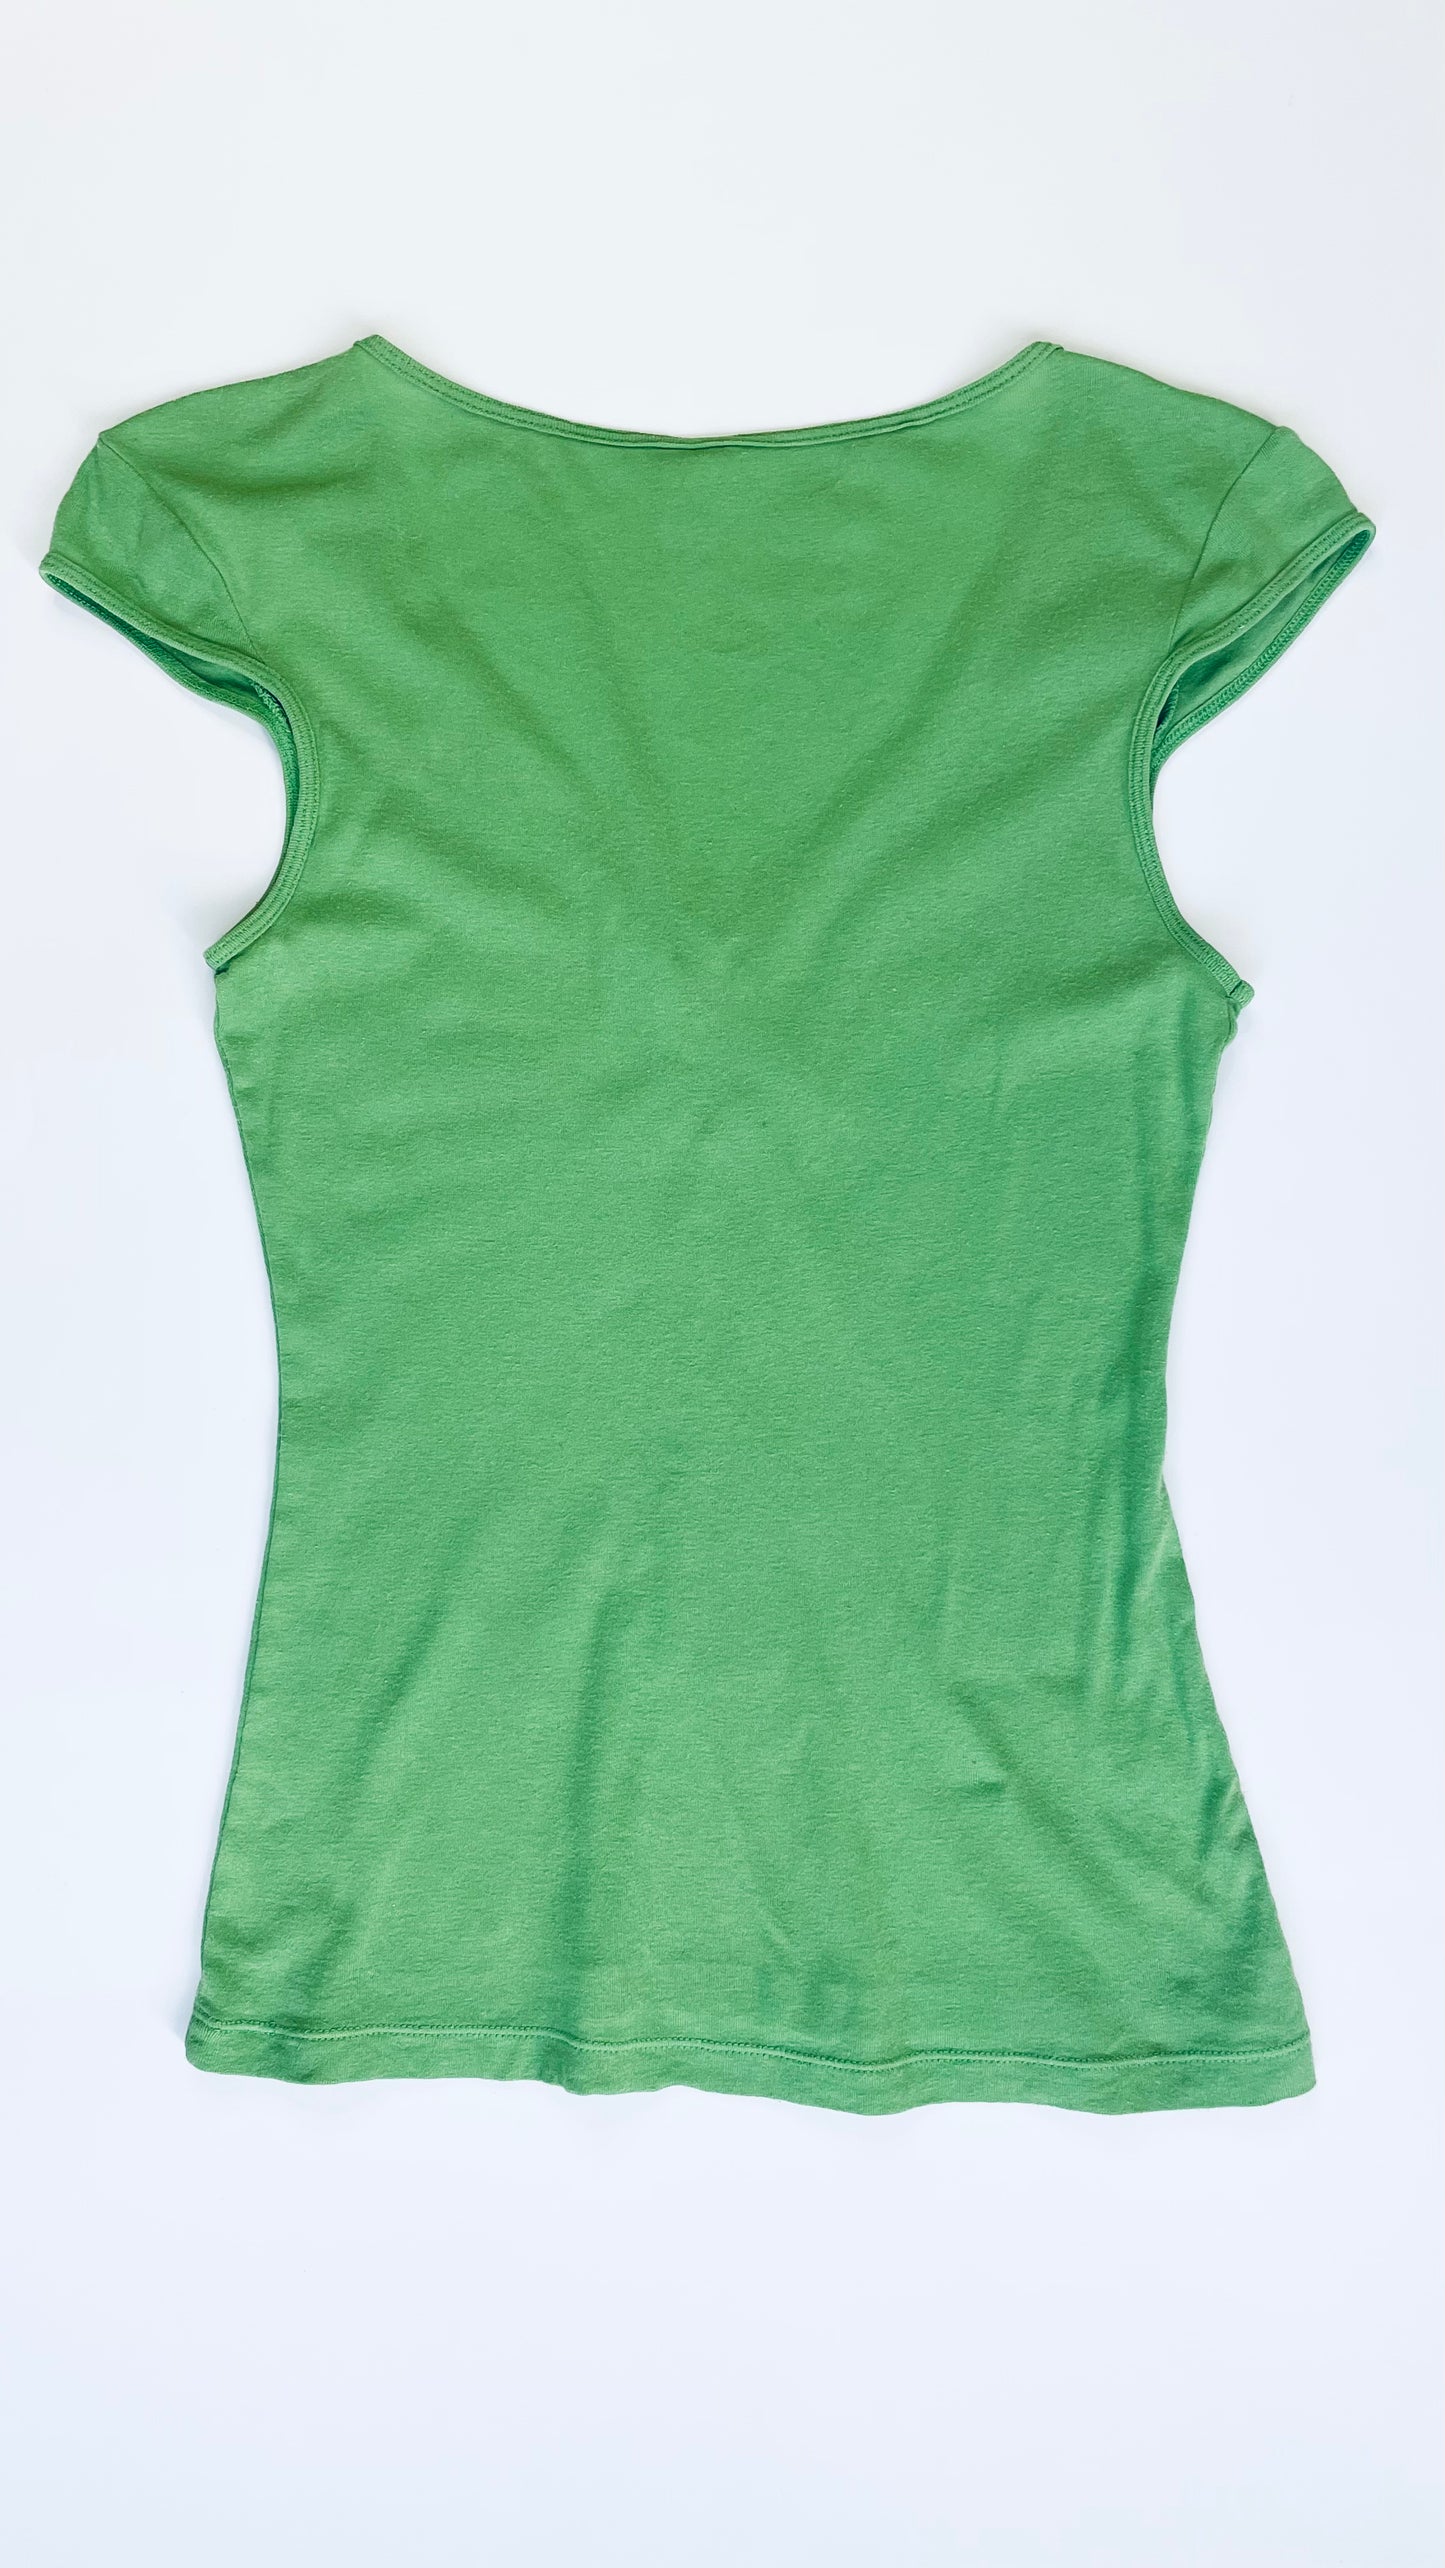 Vintage American Apparel Y2K green t shirt - Size M